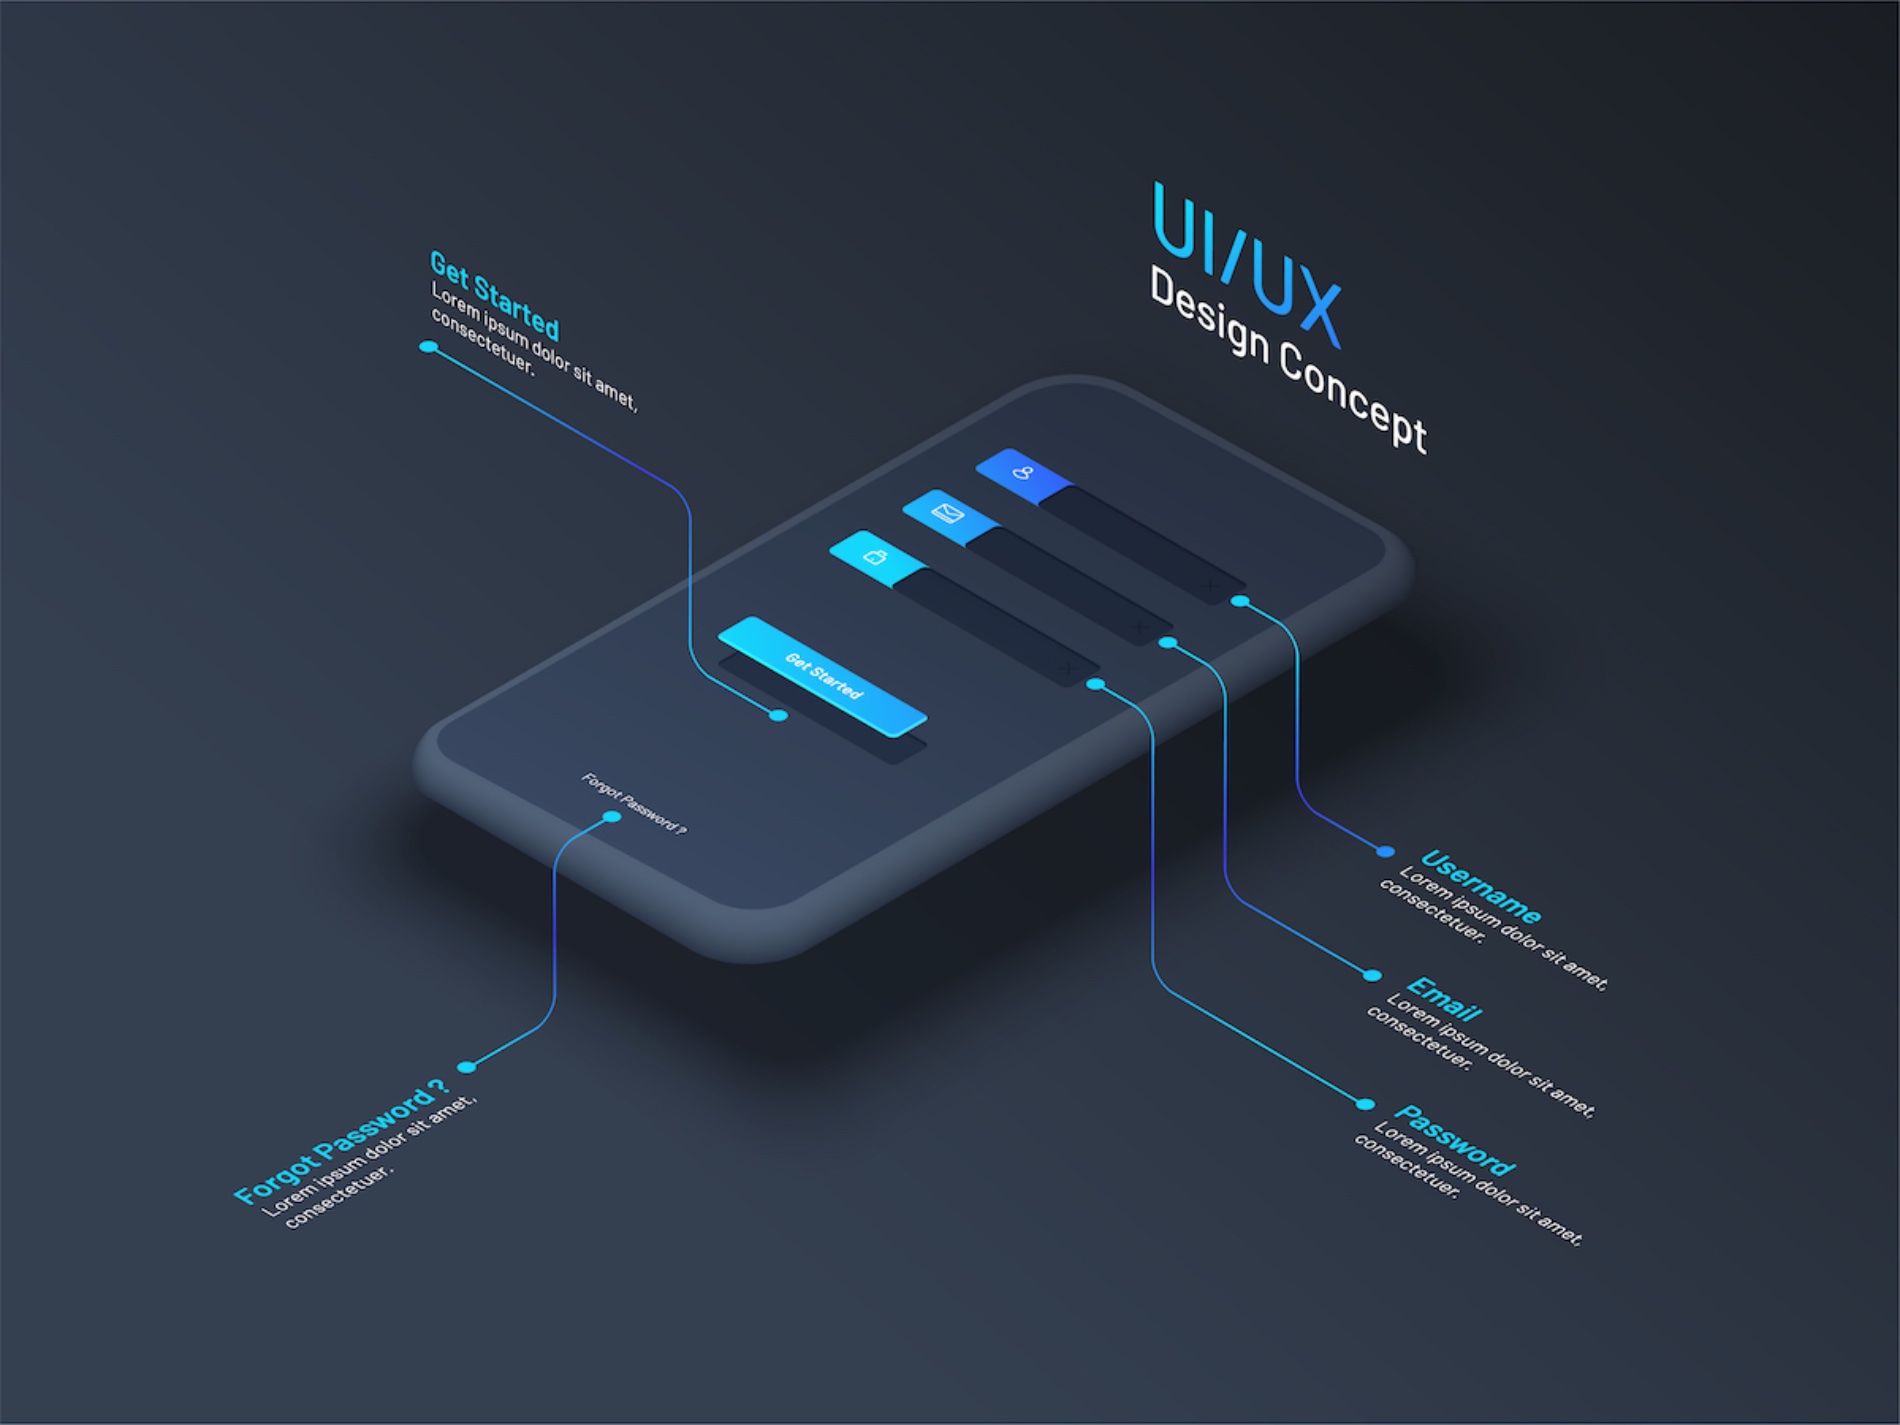 UI/UX Design Concept on a Smartphone